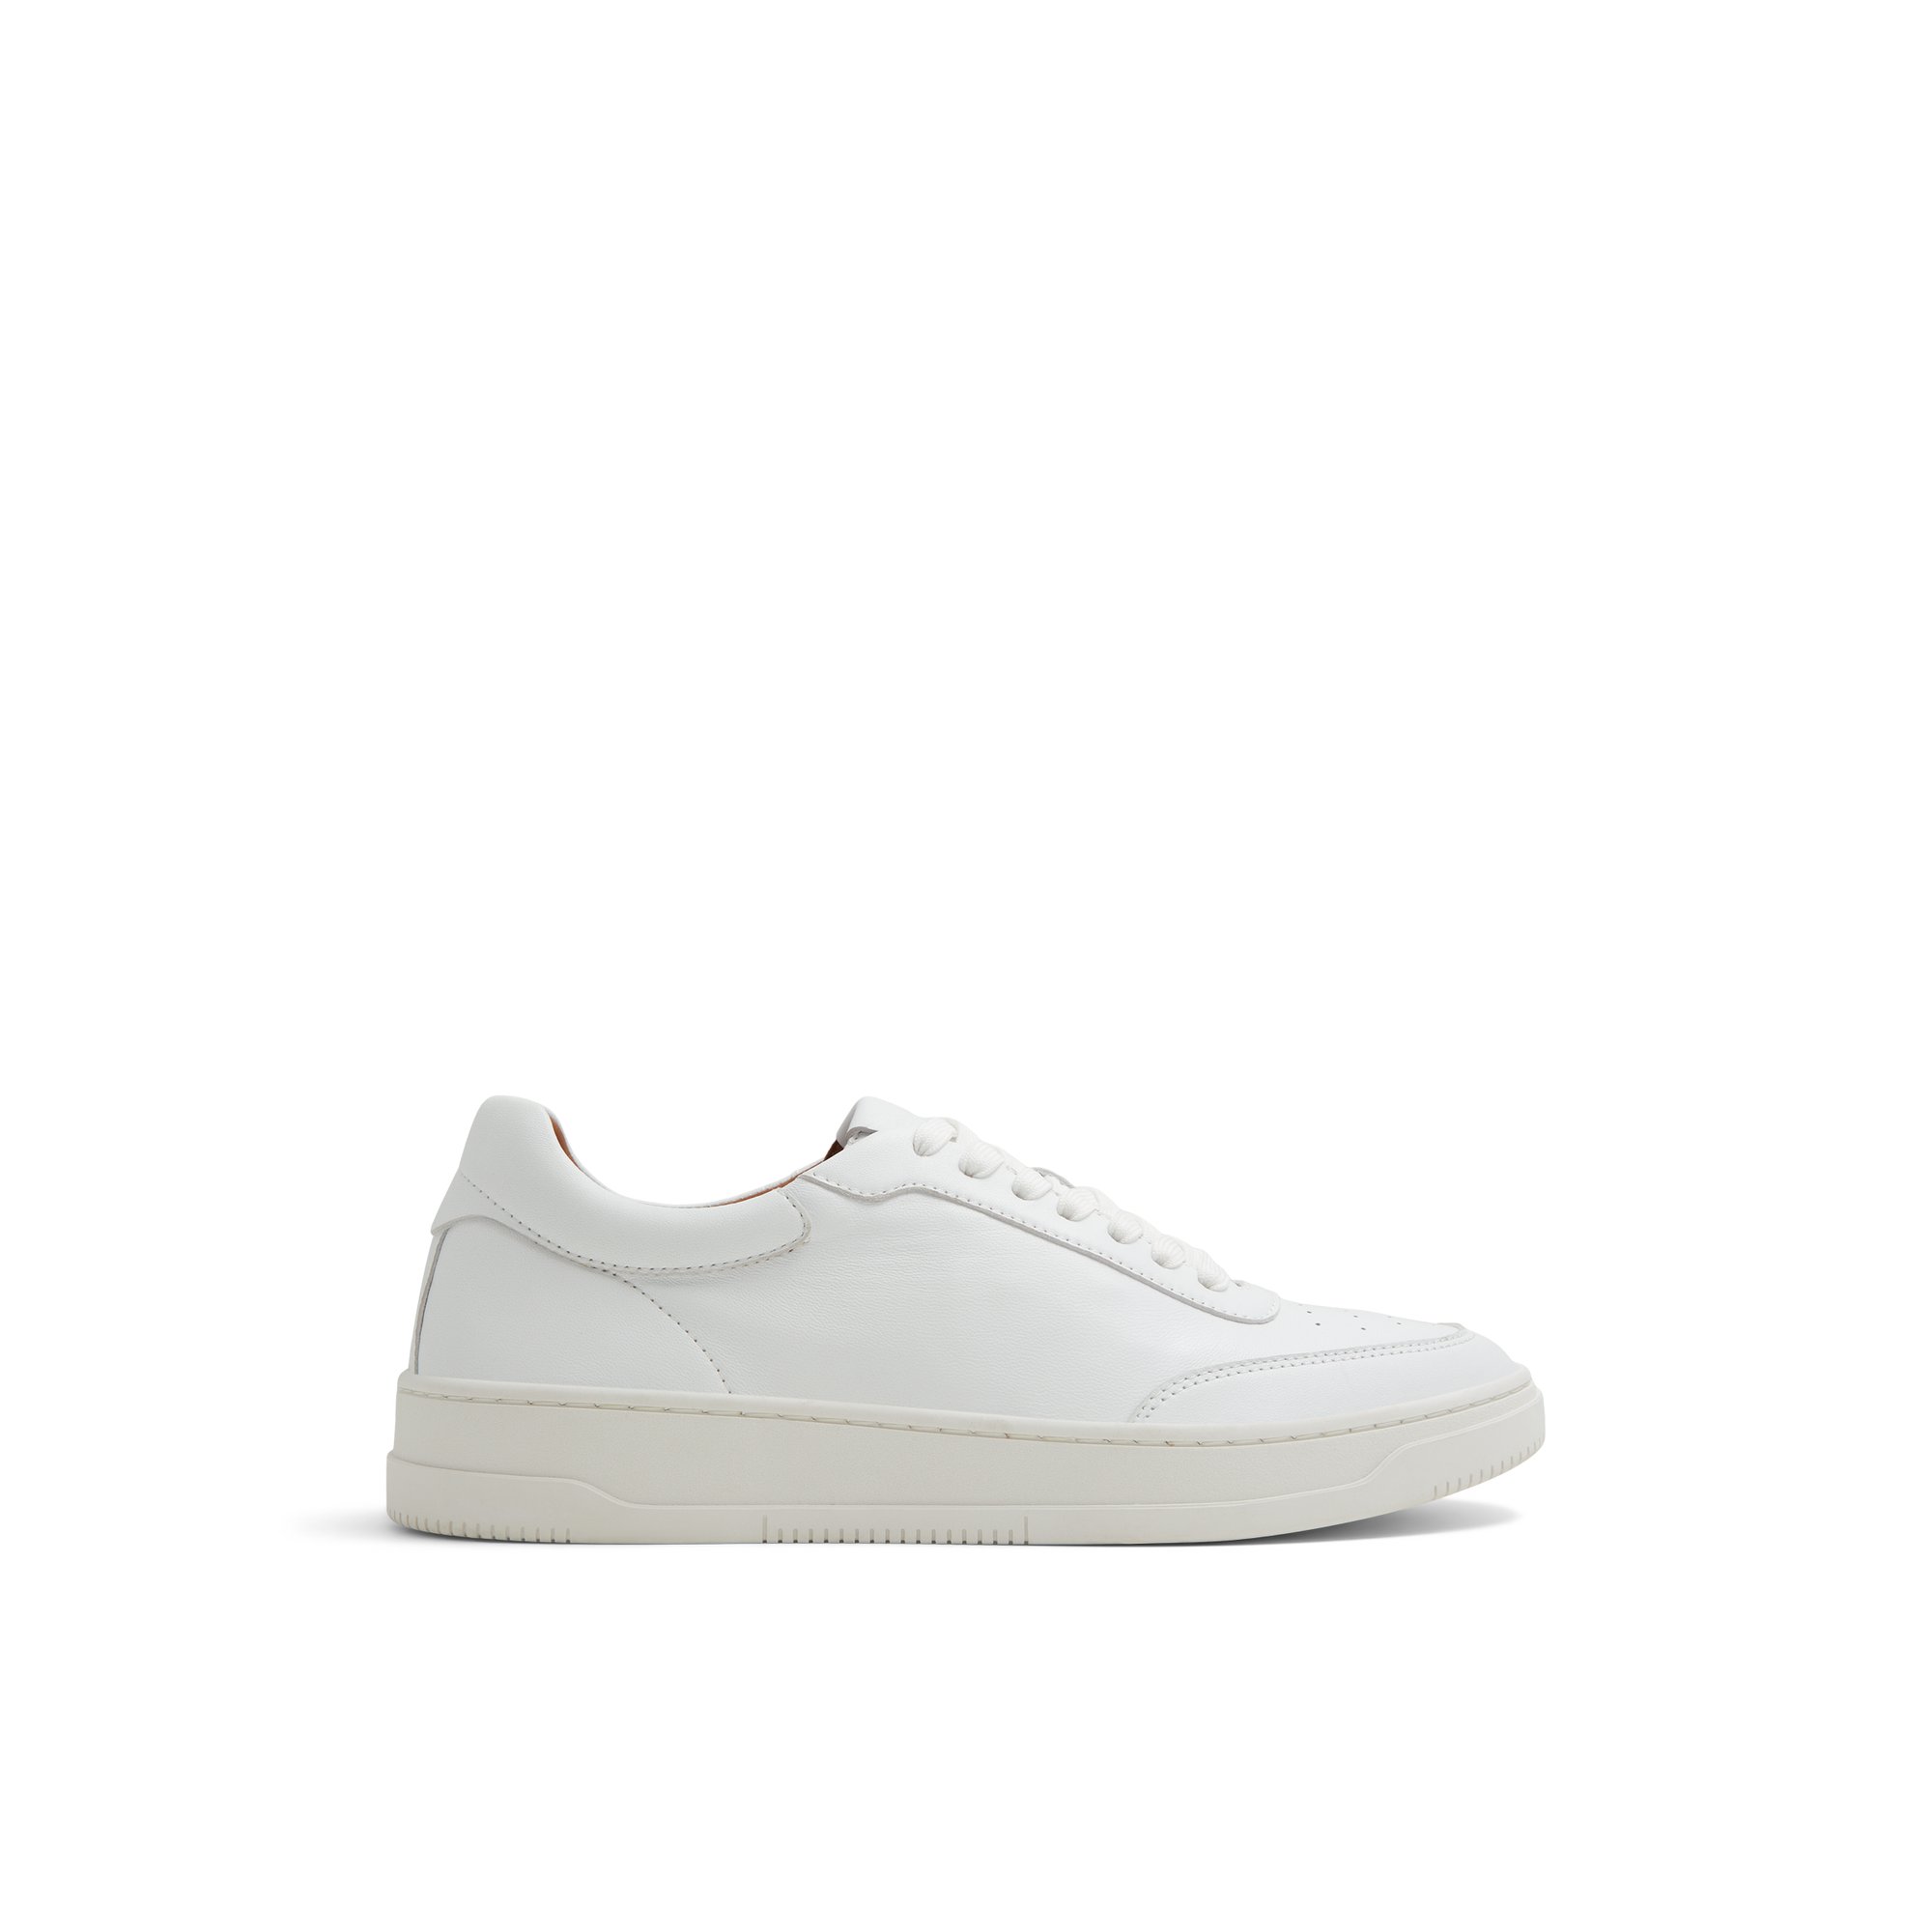 ALDO Baseliner - Men's Sneakers Low Top - White